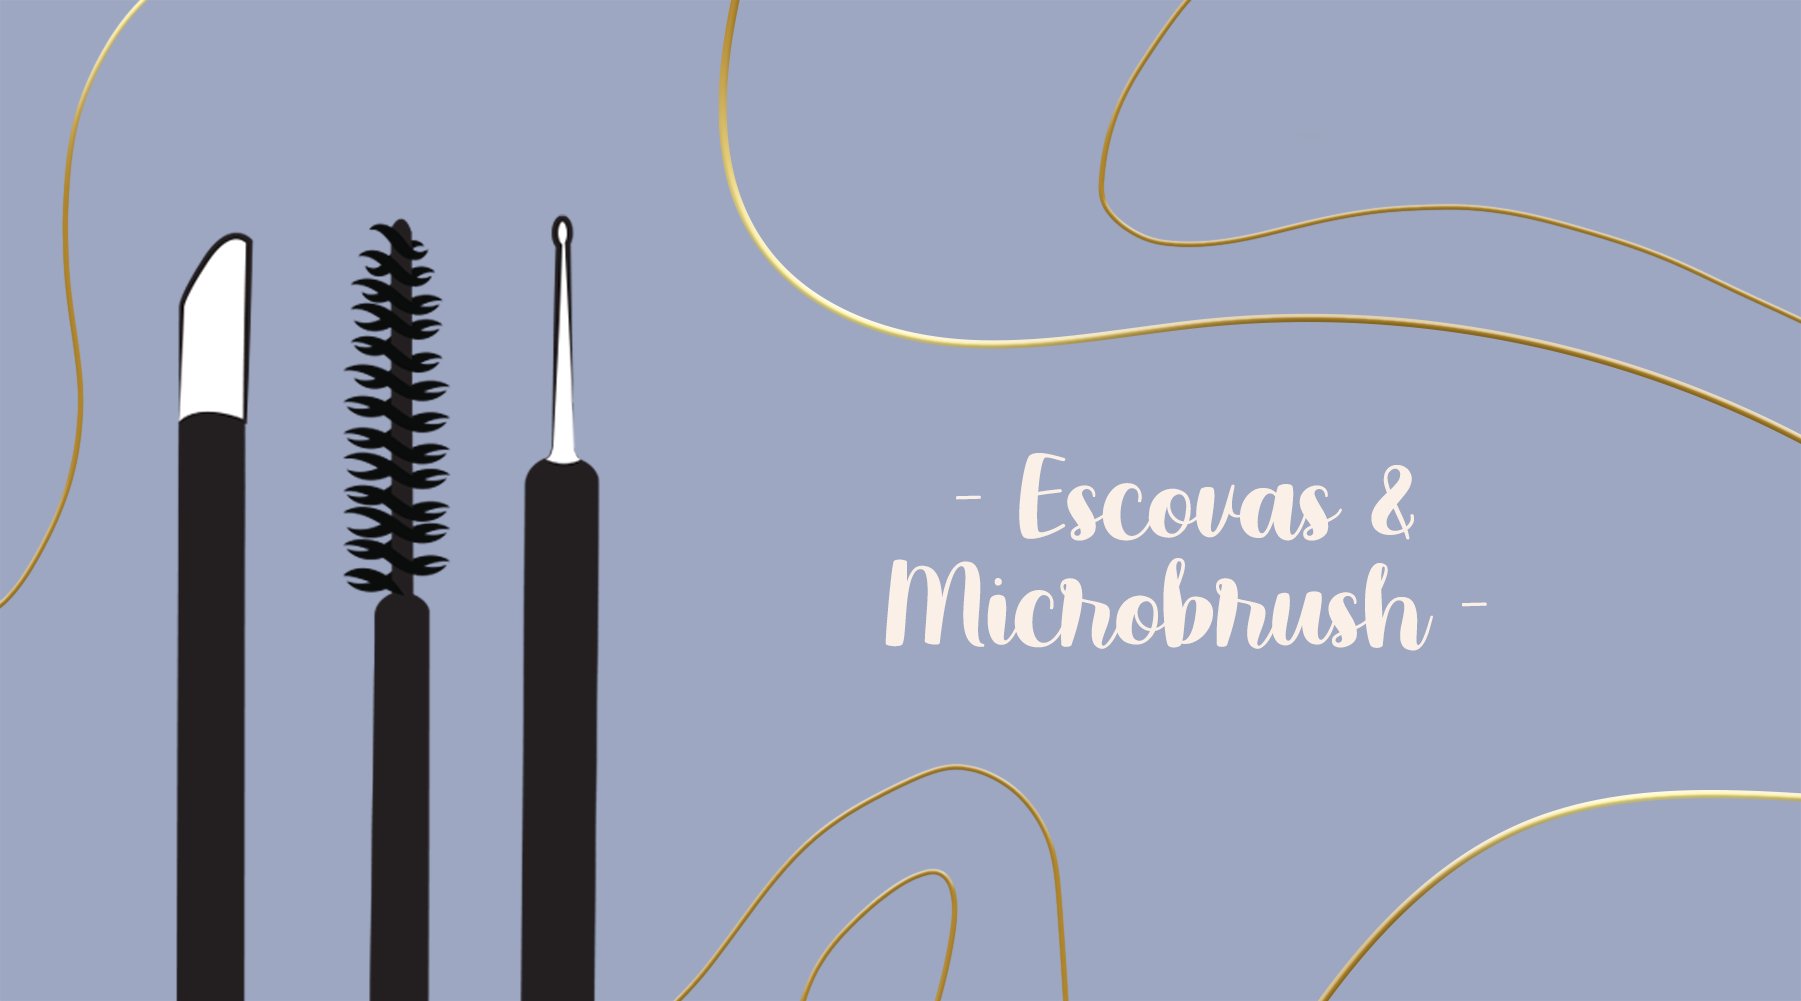 Brushes and microbrush